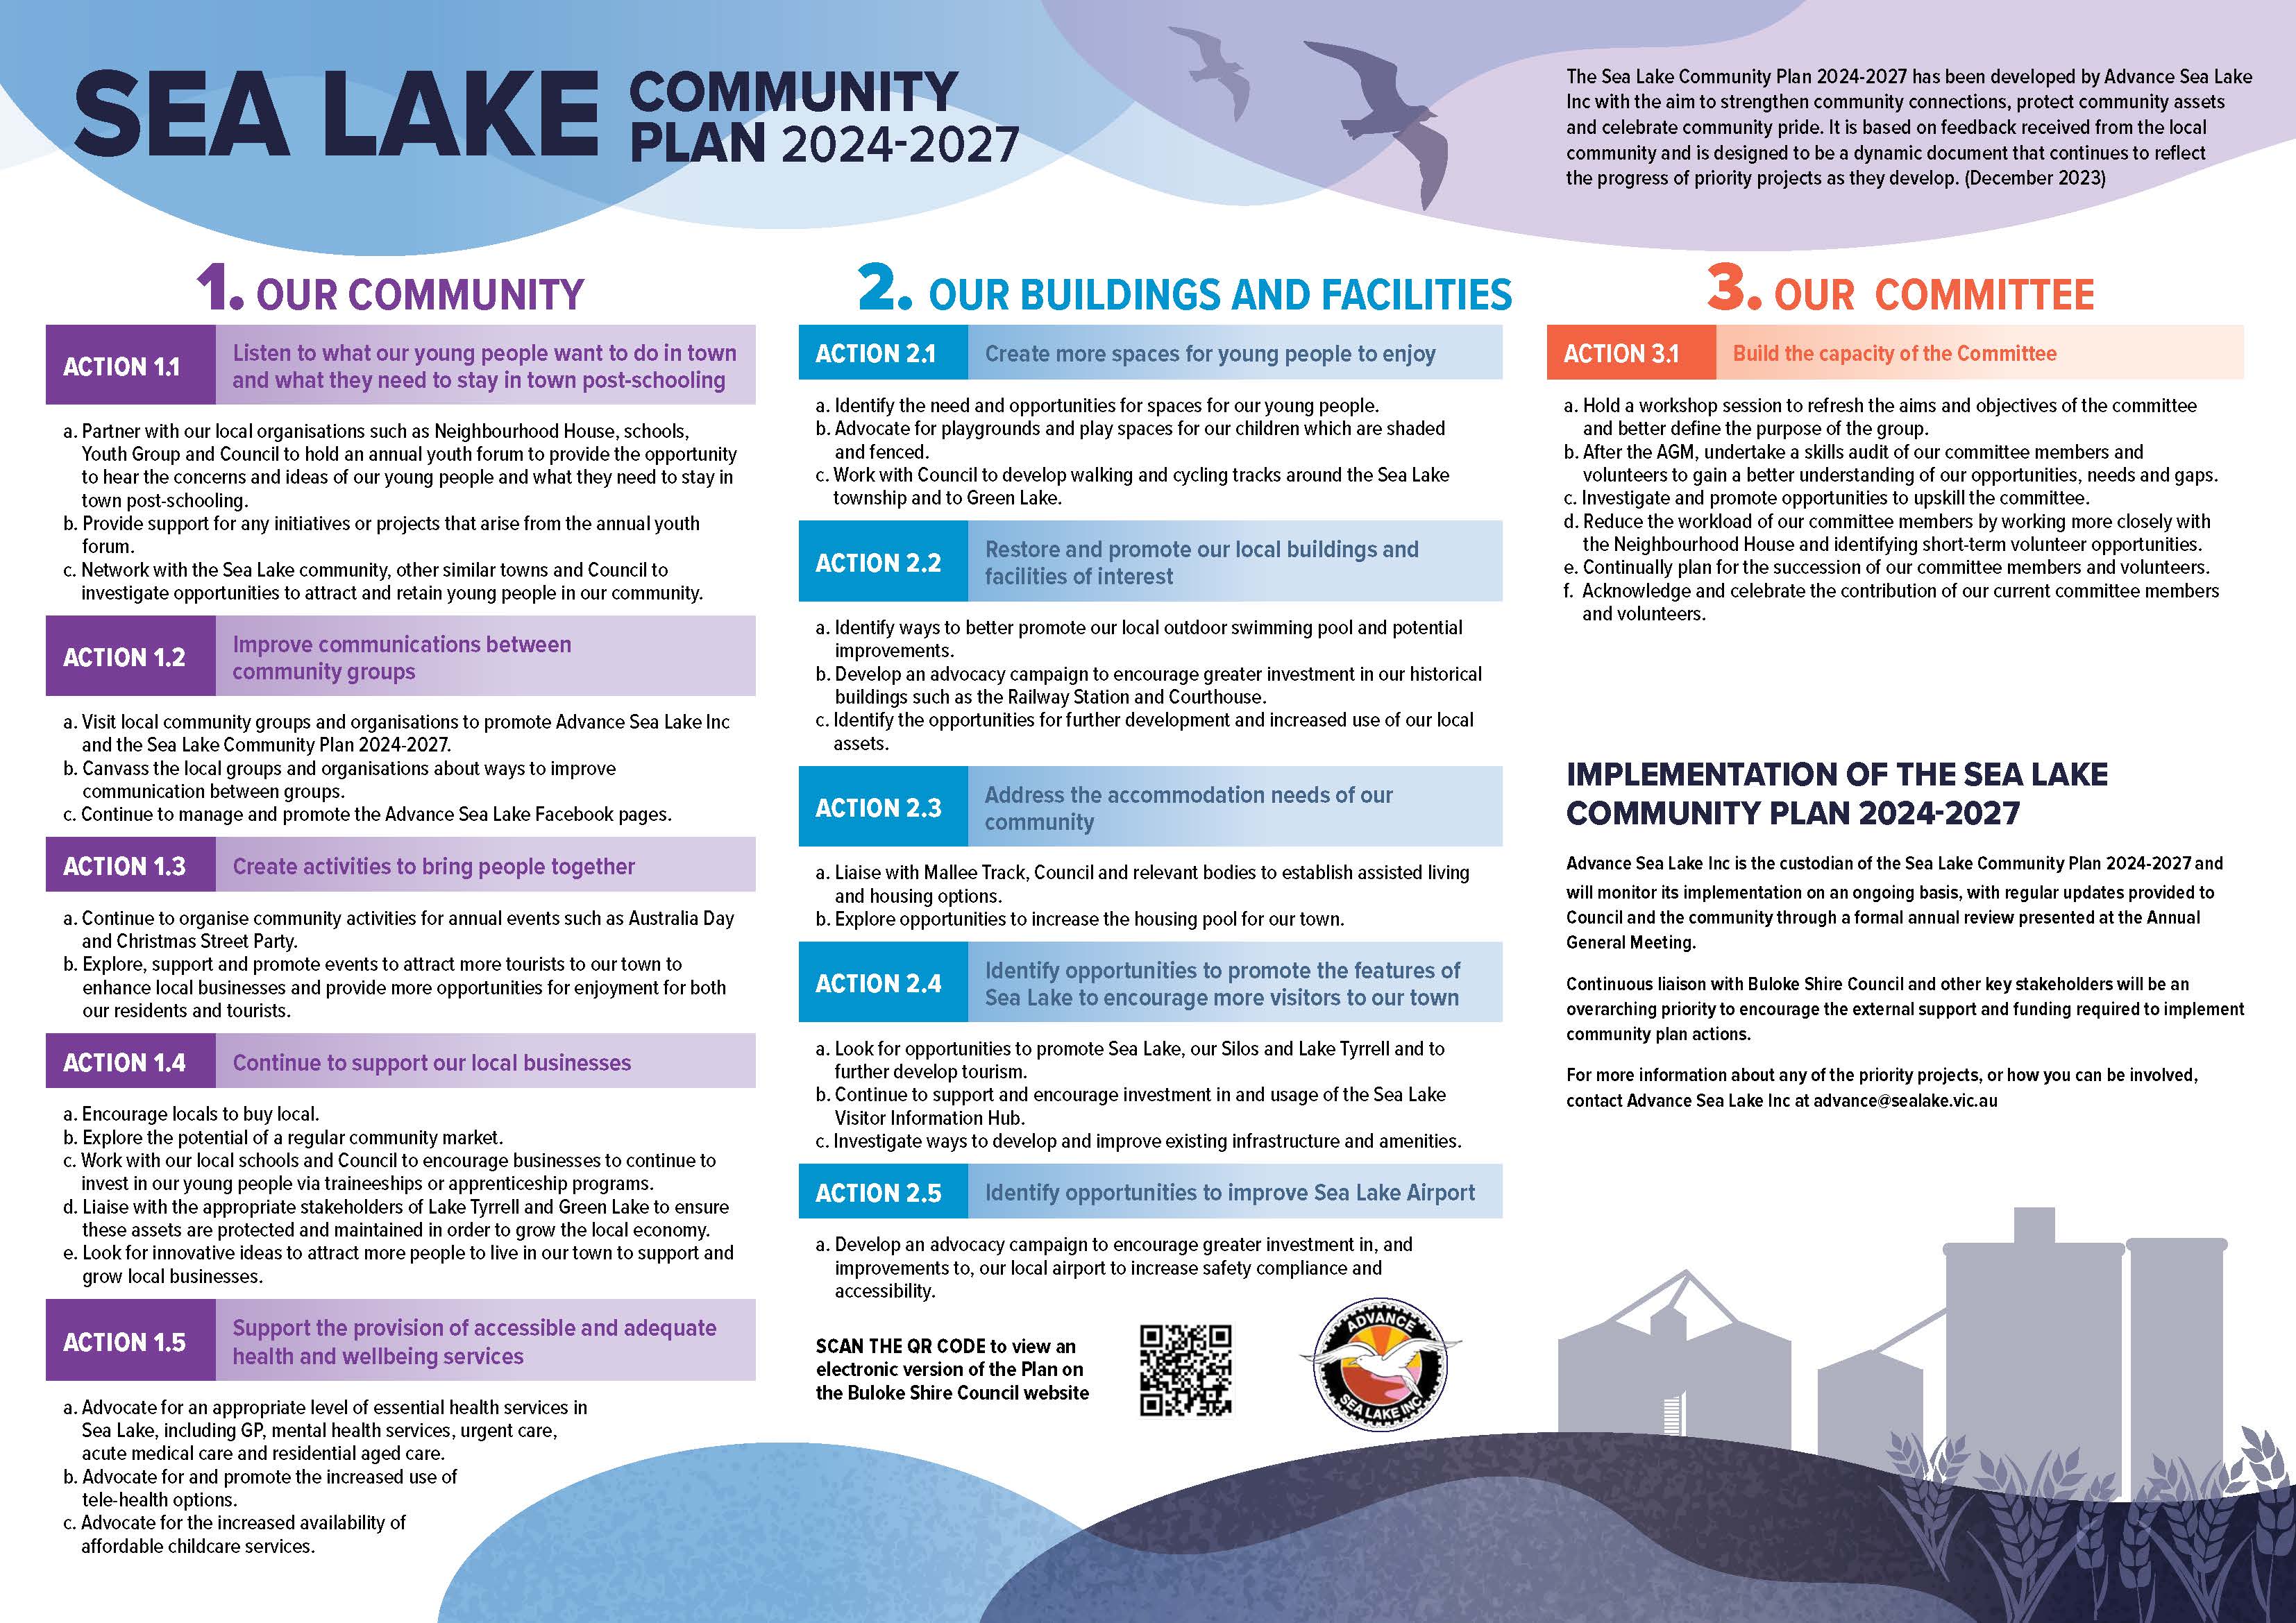 Sea Lake Community Plan 24-27